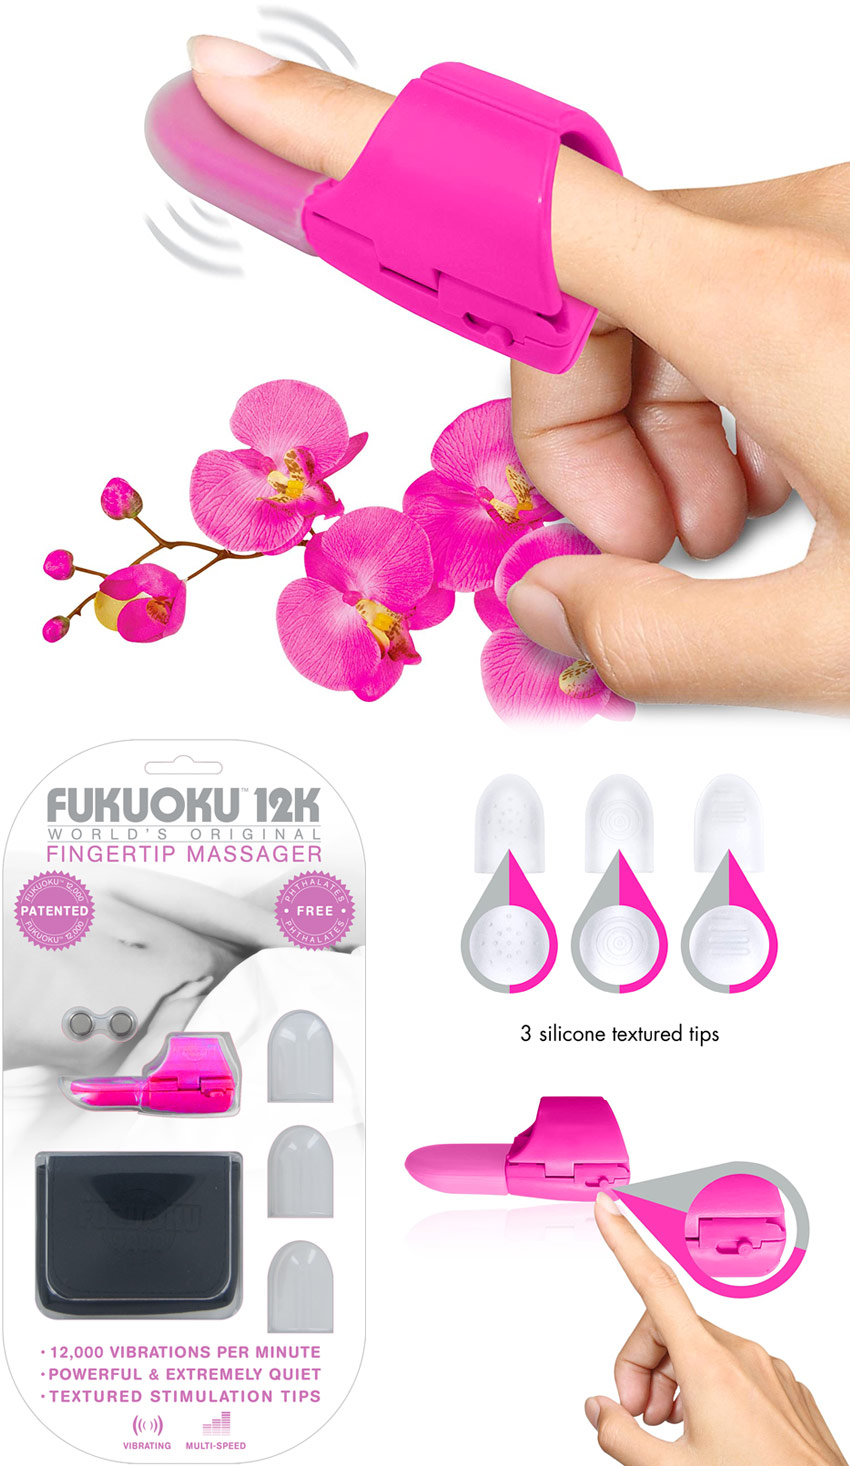 Fukuoku 12K - Vibrating stimulator to be placed on a finger